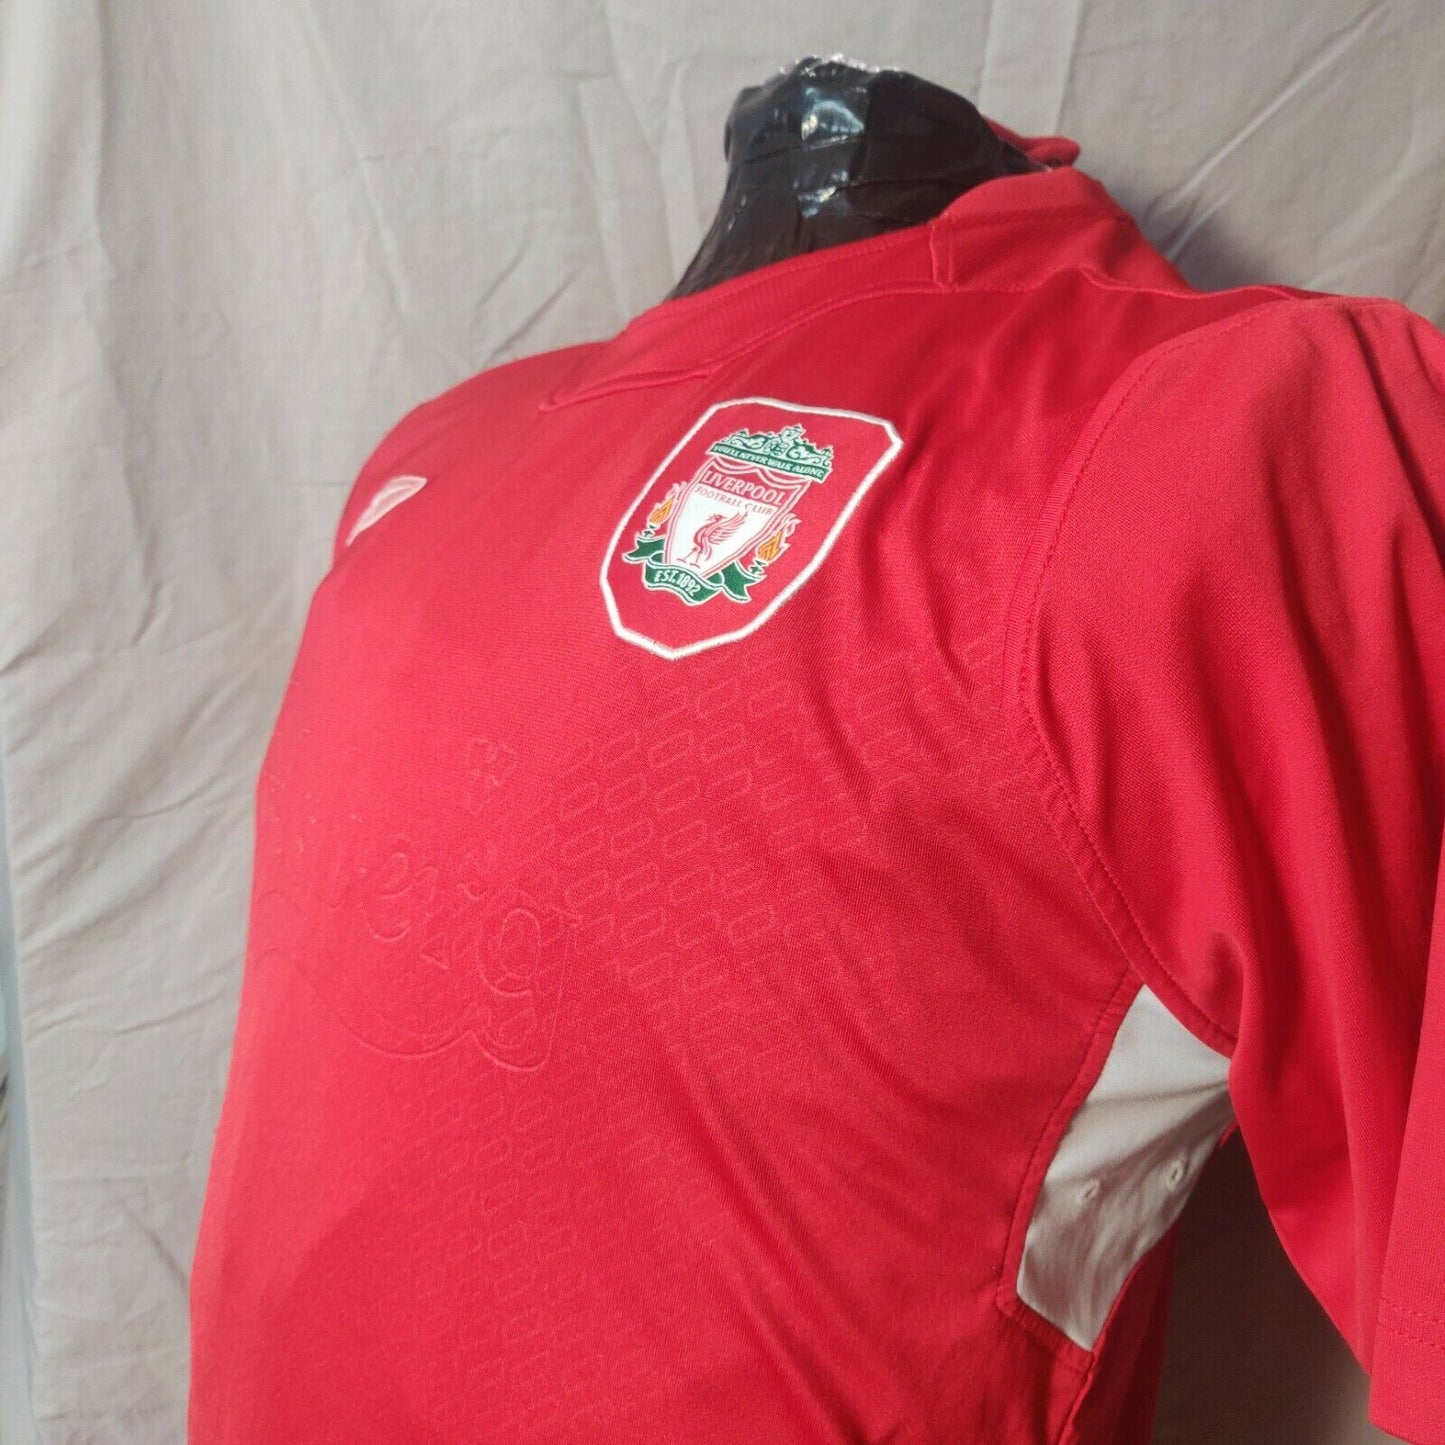 Liverpool FC 2005/06 Red Reebok Alonso Jersey Men Size Medium